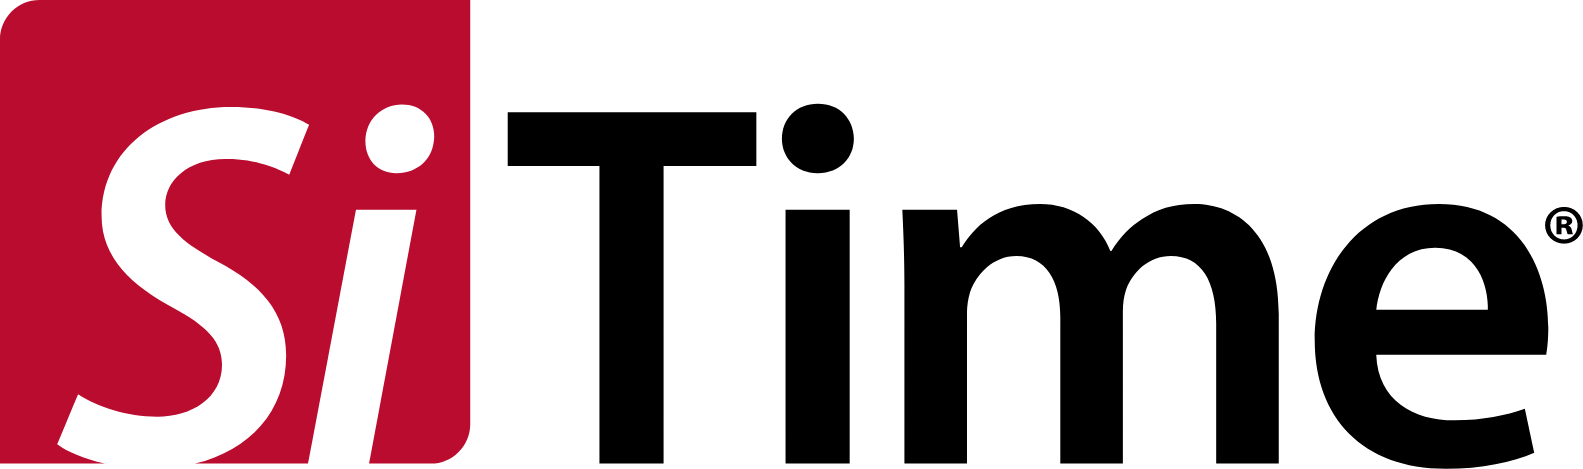 SiTime logo large (transparent PNG)